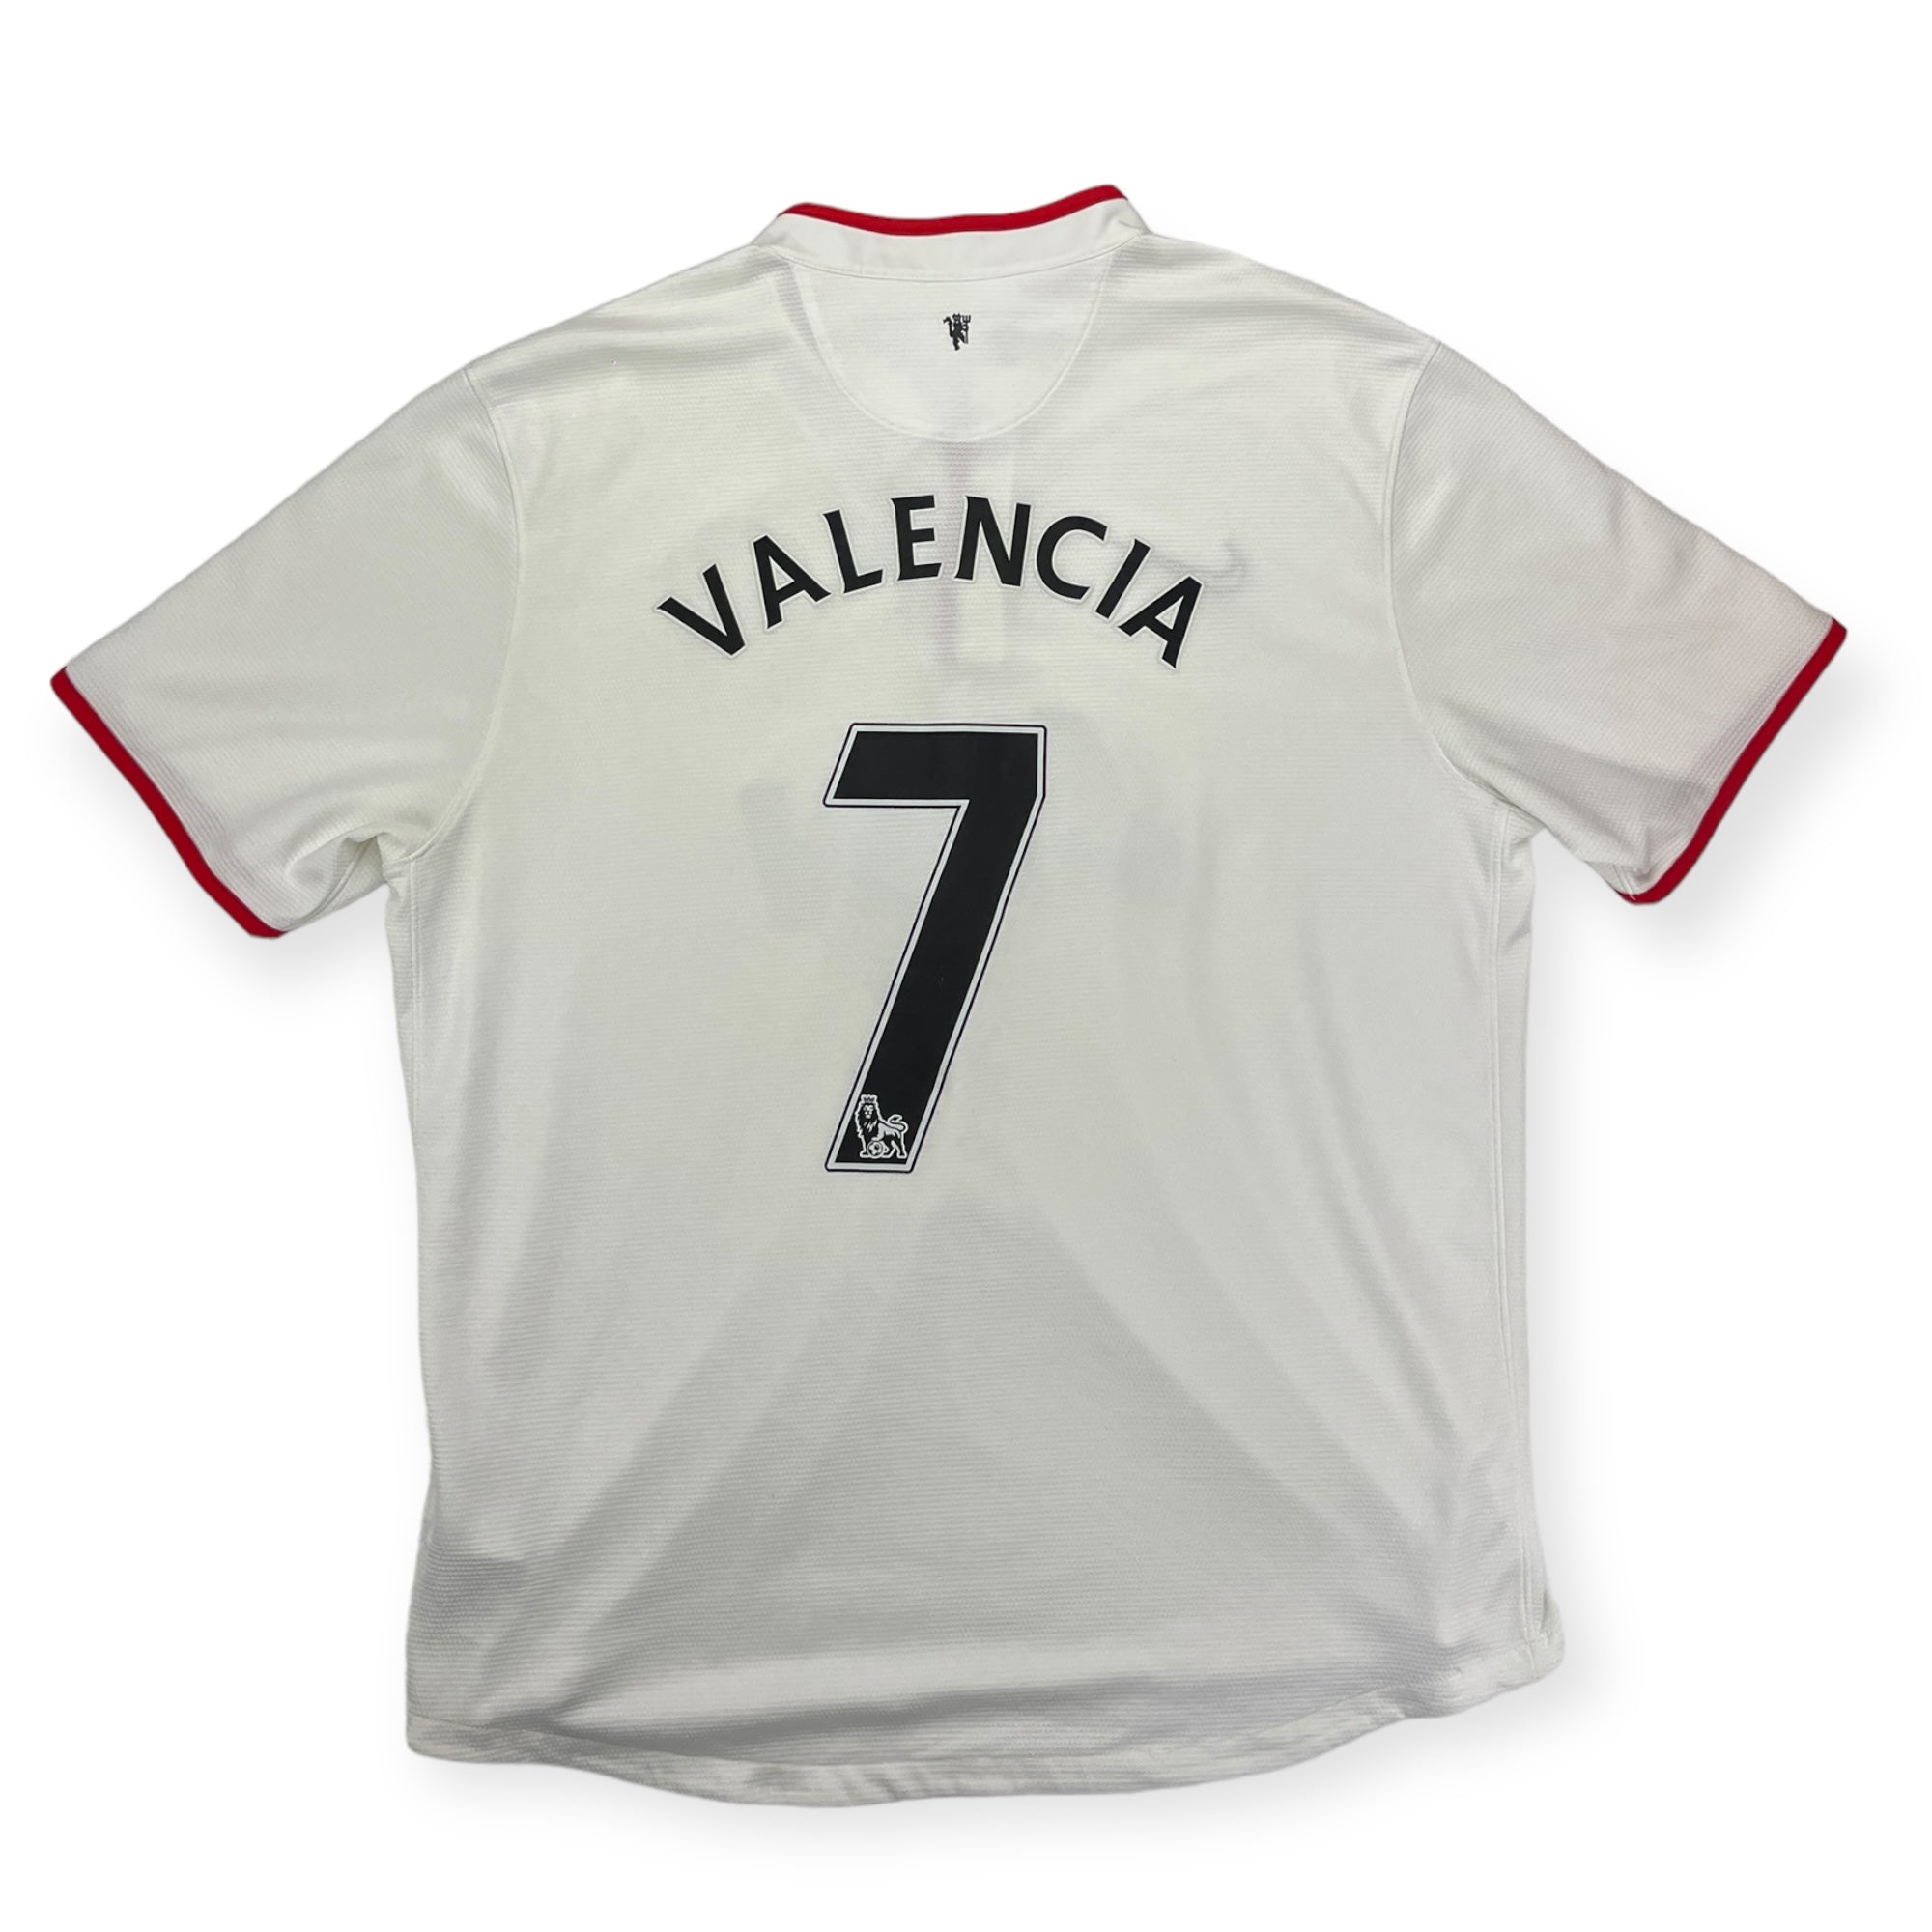 Manchester United 2012 Third Shirt, Valencia 7